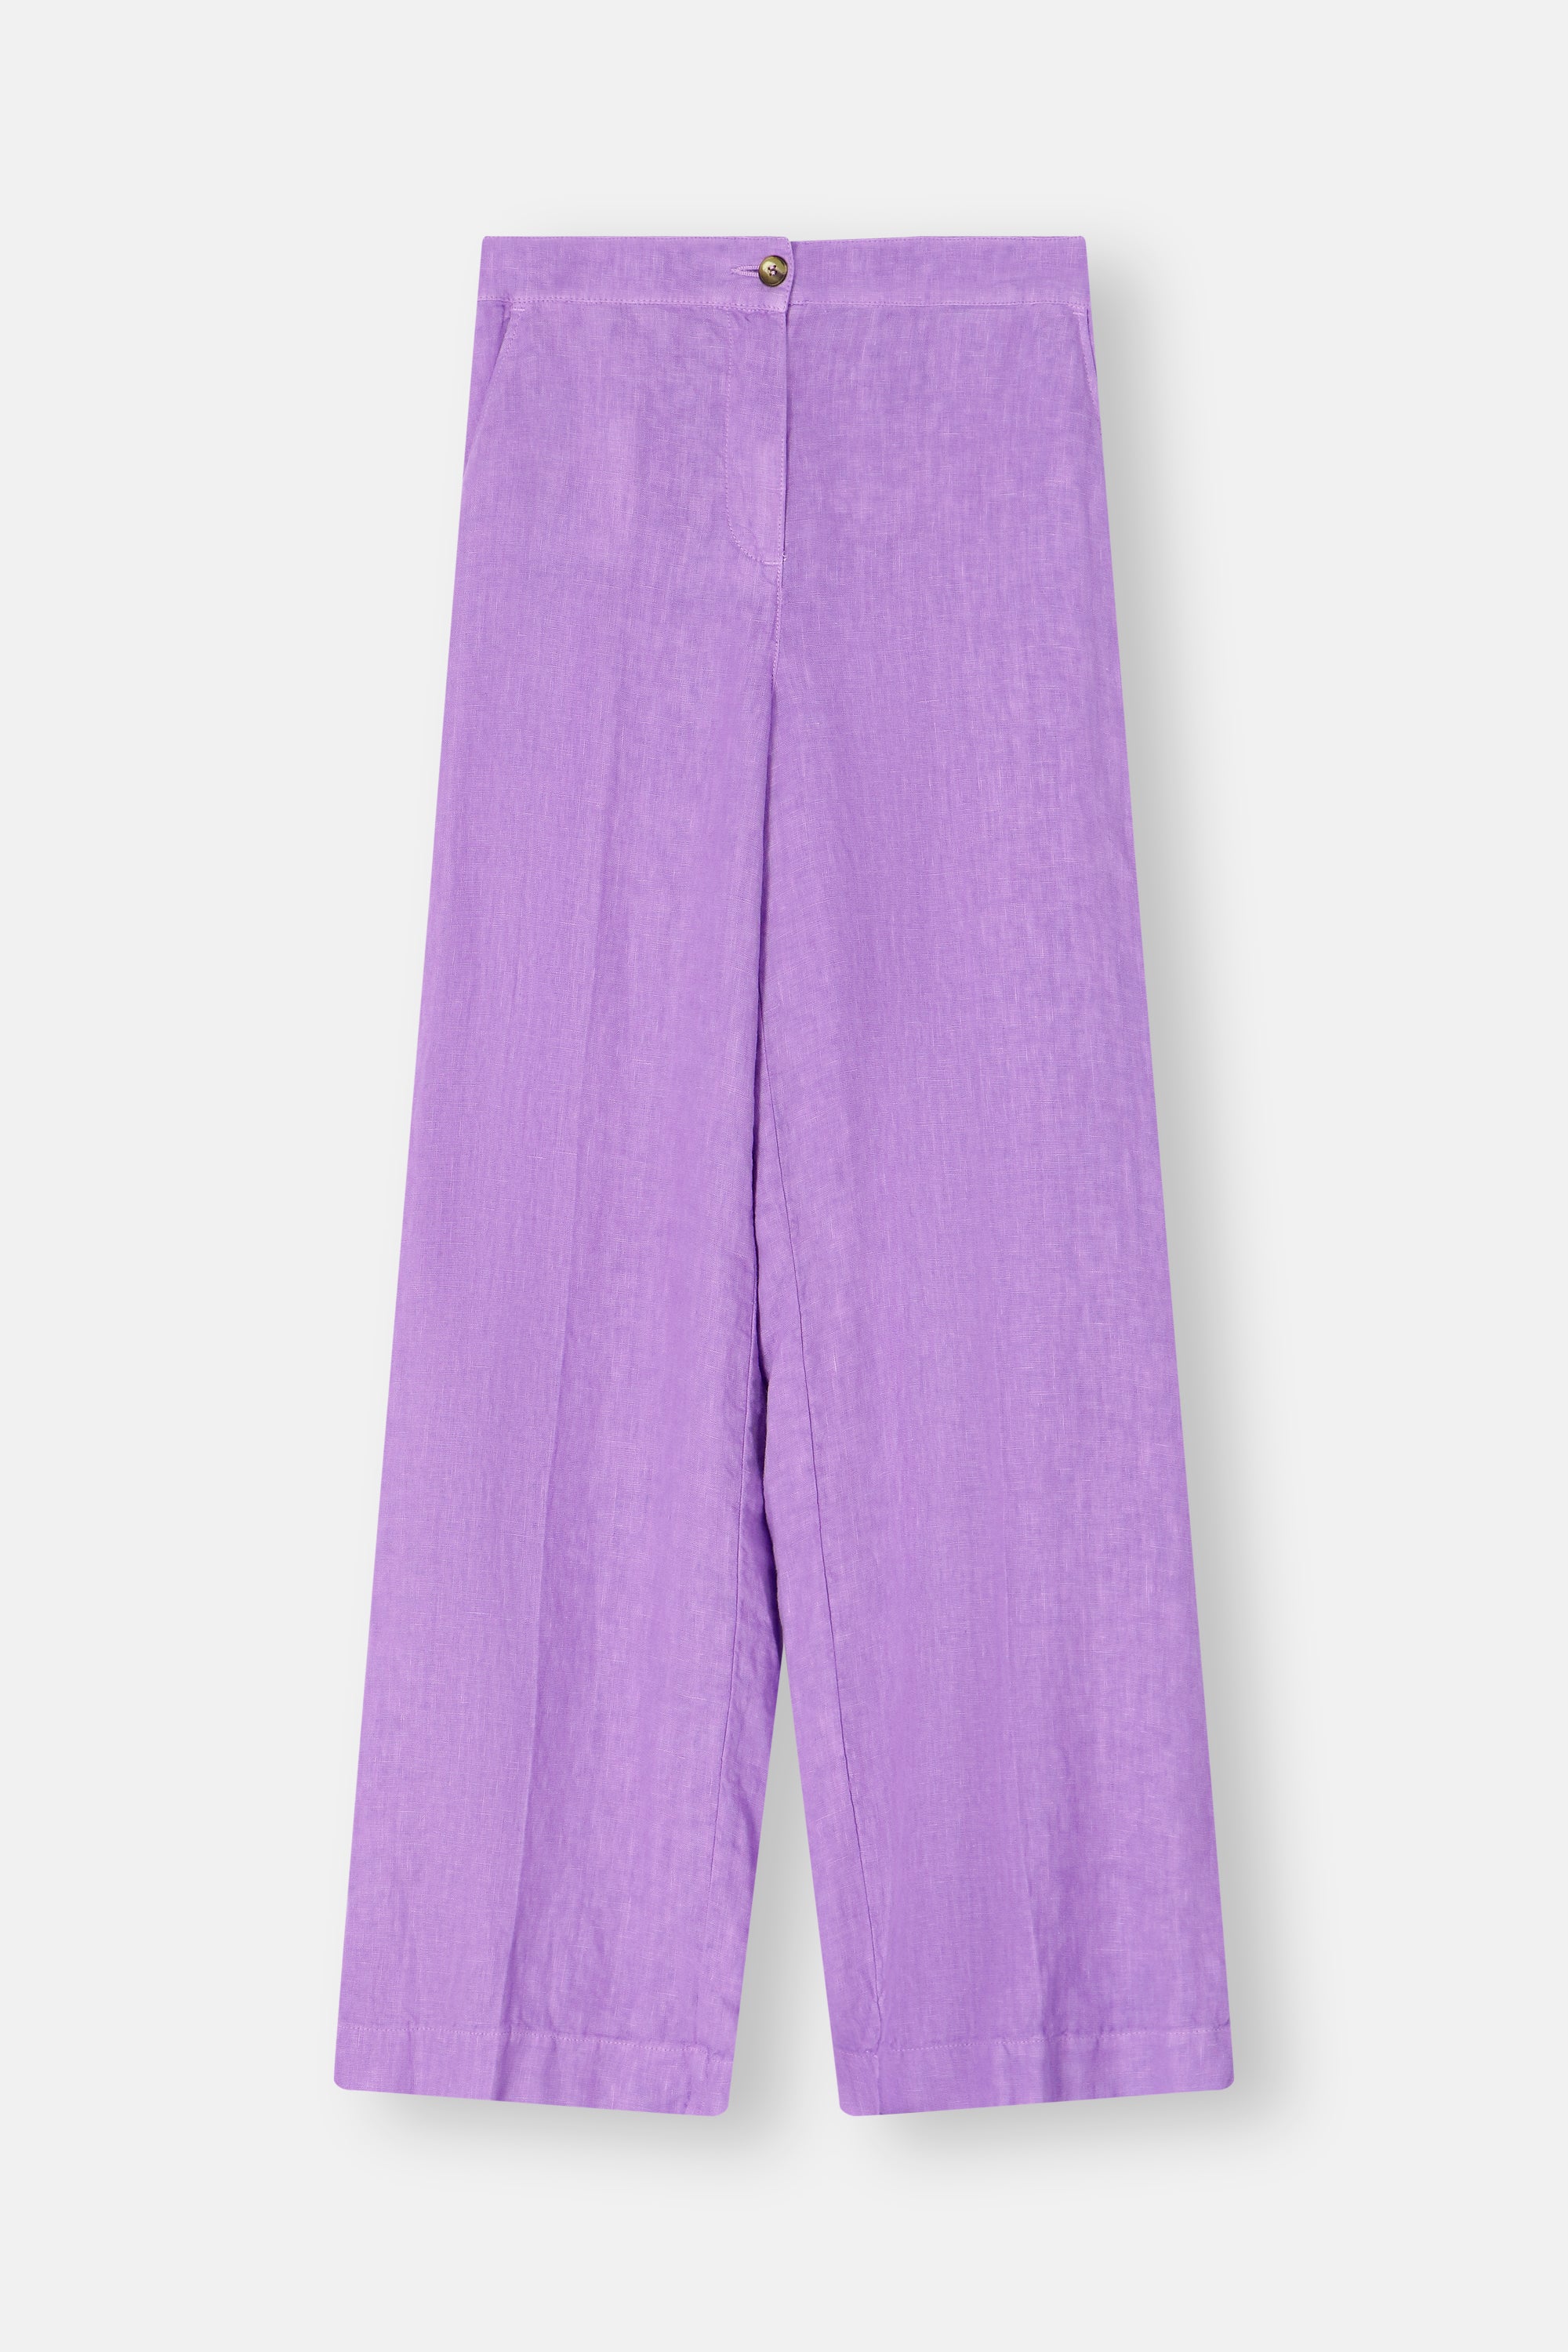 Pantalon Violet Terre Bleue (Hosta/334)